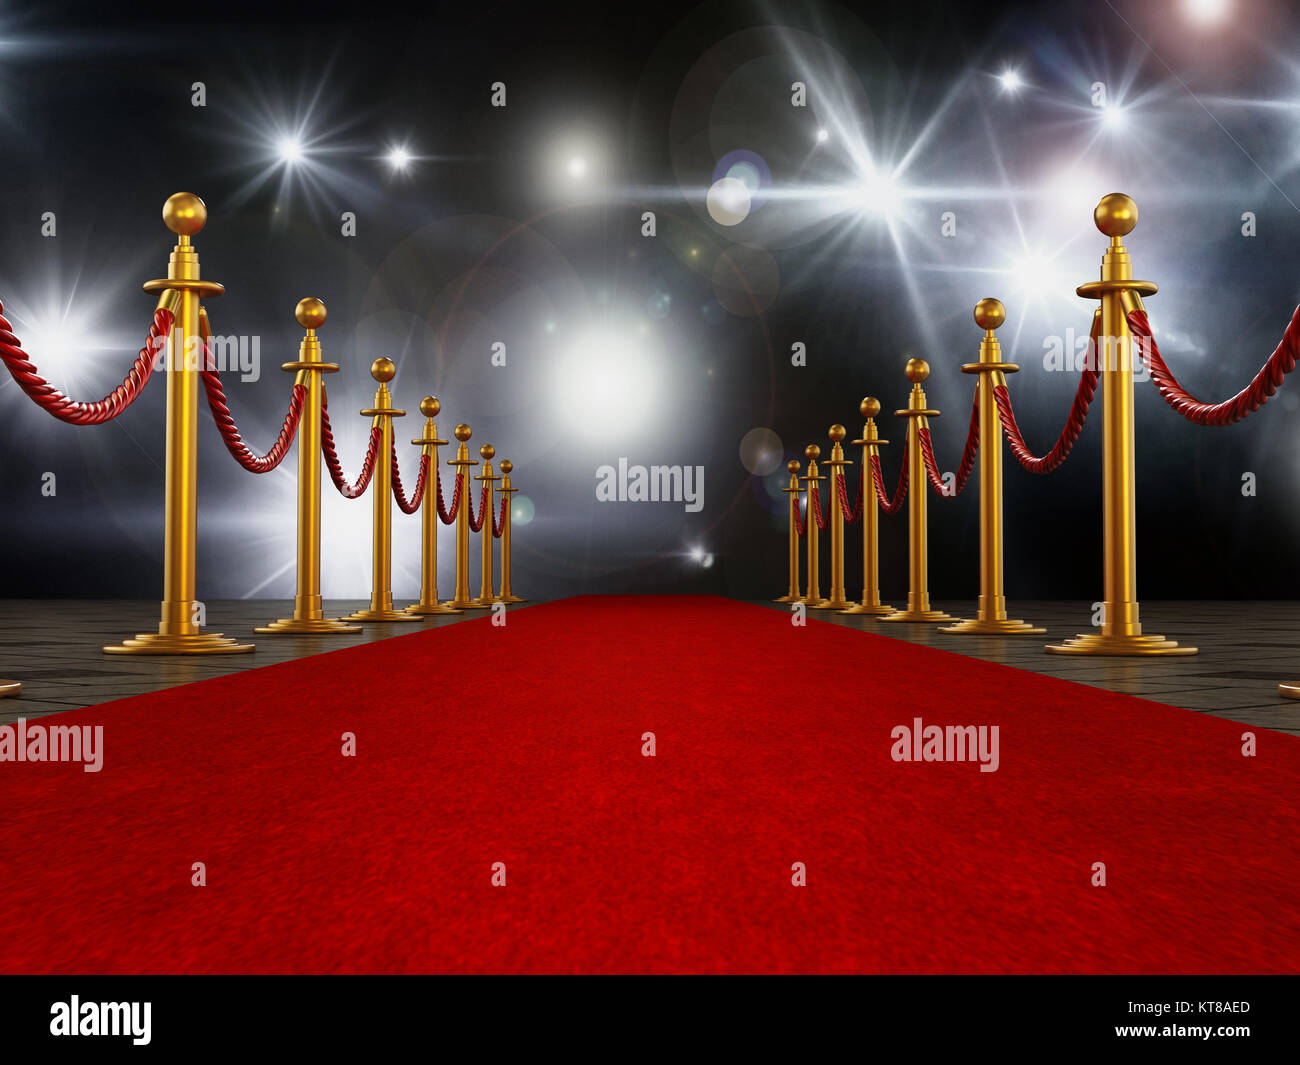 Red carpet and velvet ropes on gala night background. 3D illustration. Stock Photo